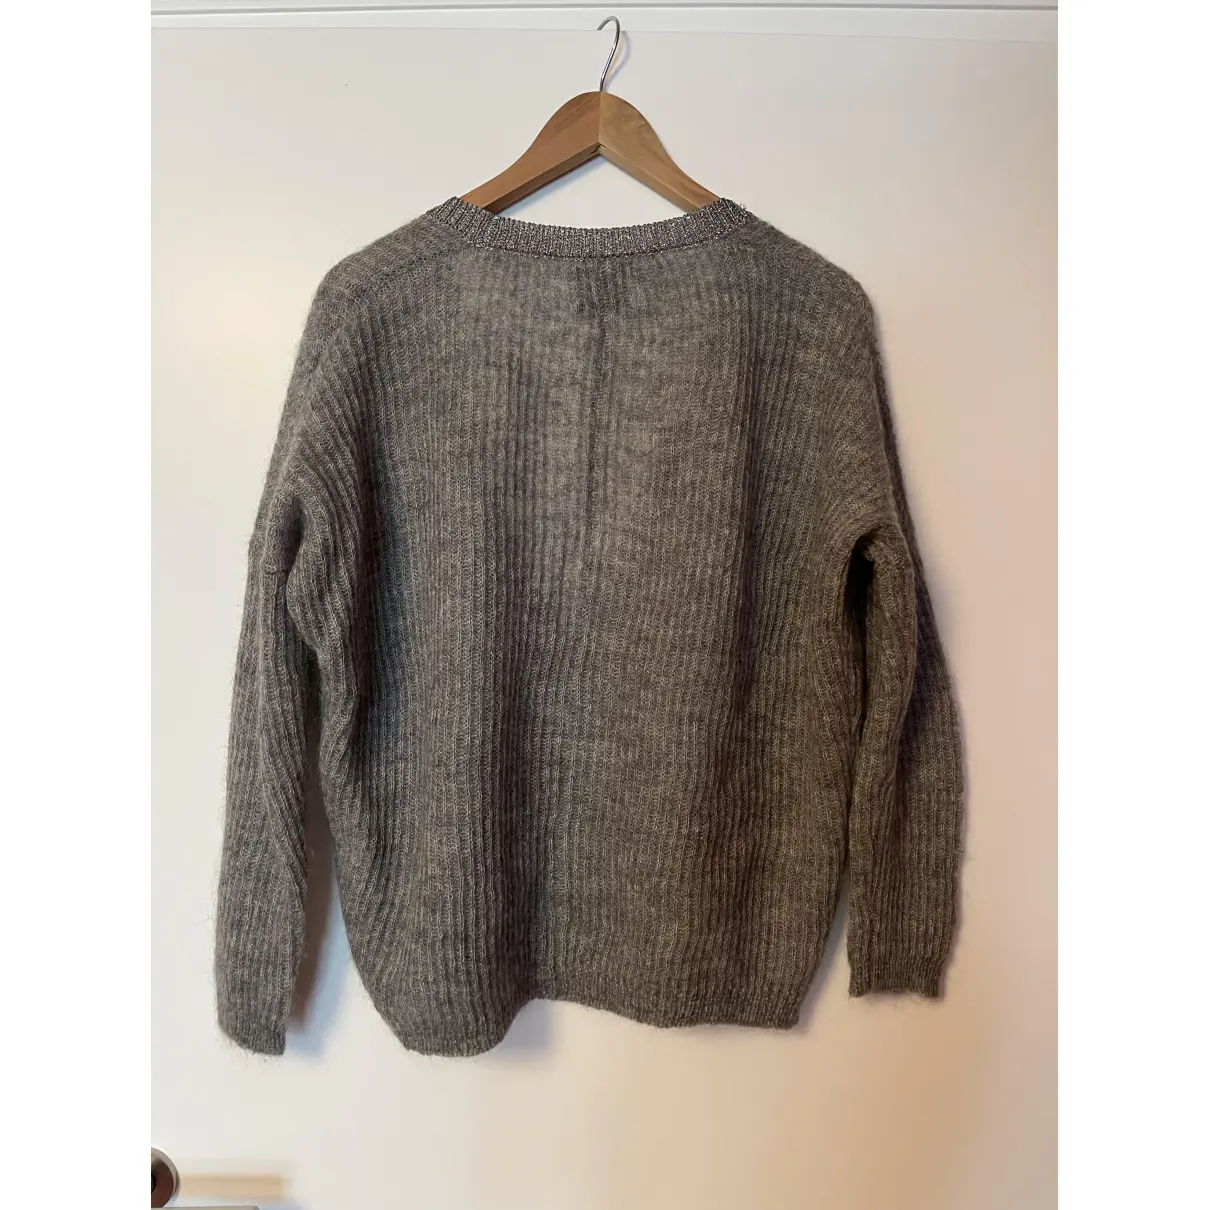 Buy Essentiel Antwerp Wool cardigan online